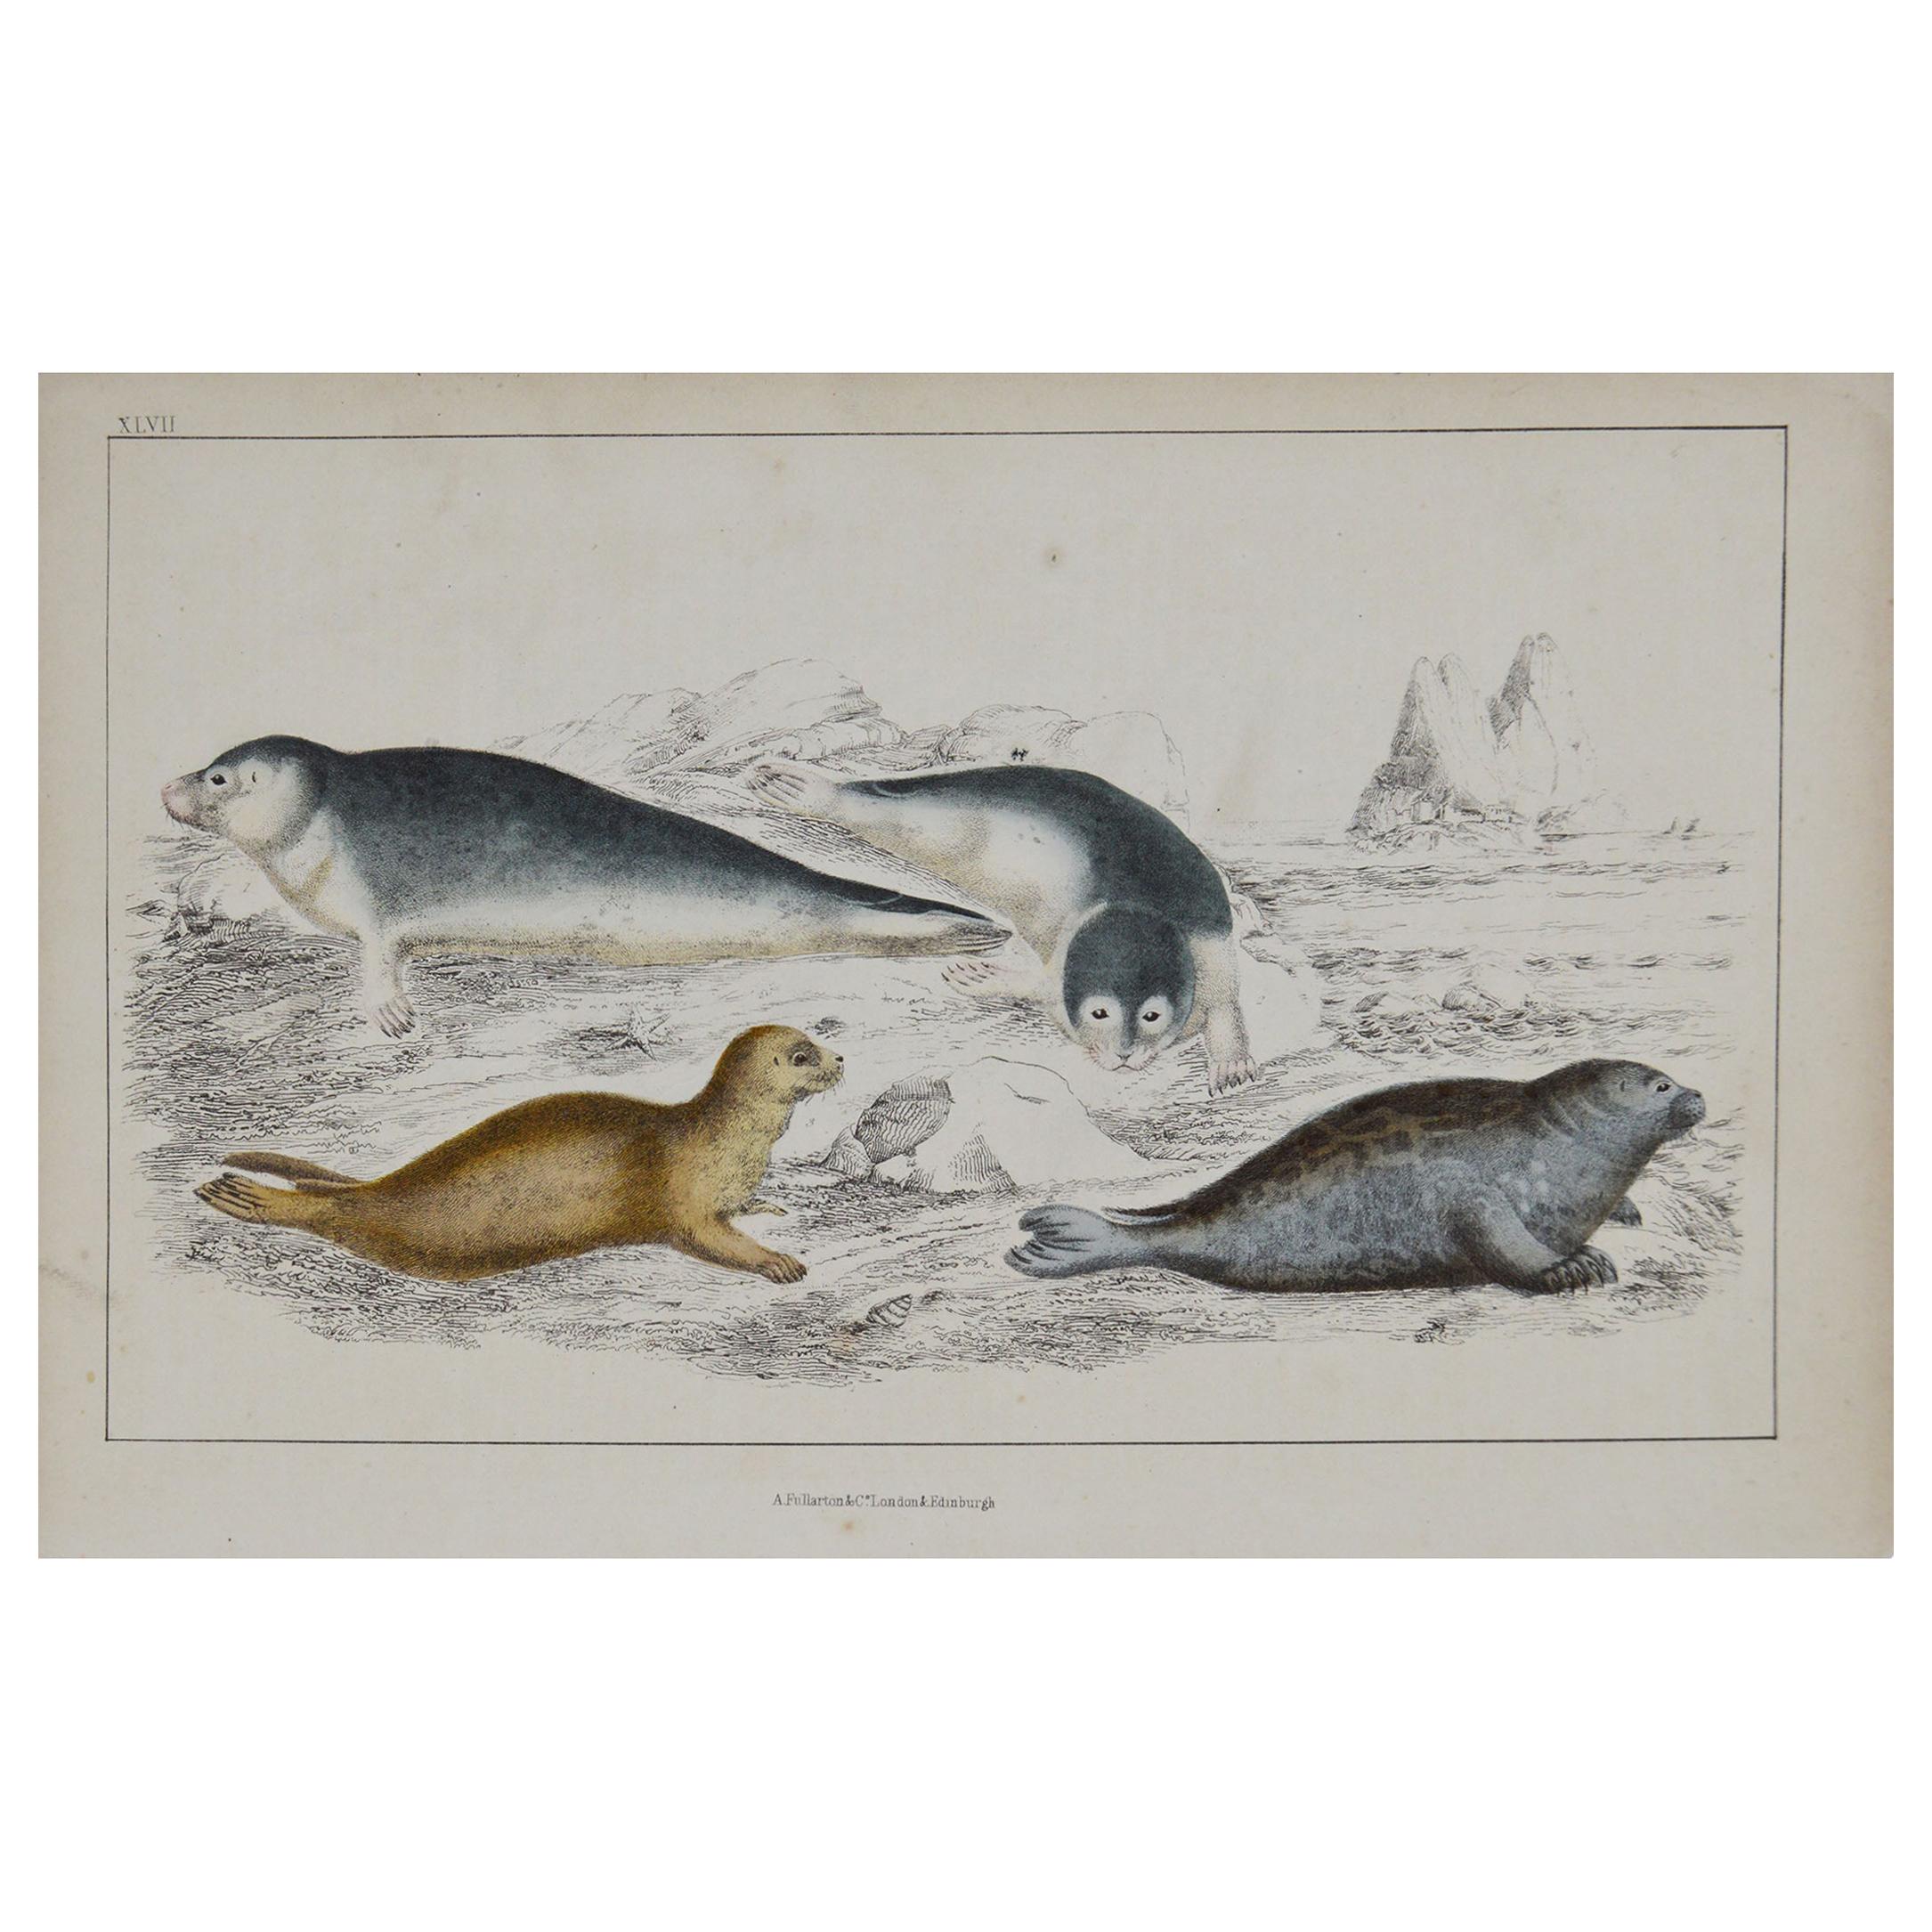 Original Antique Print of Seals, 1847 'Unframed'